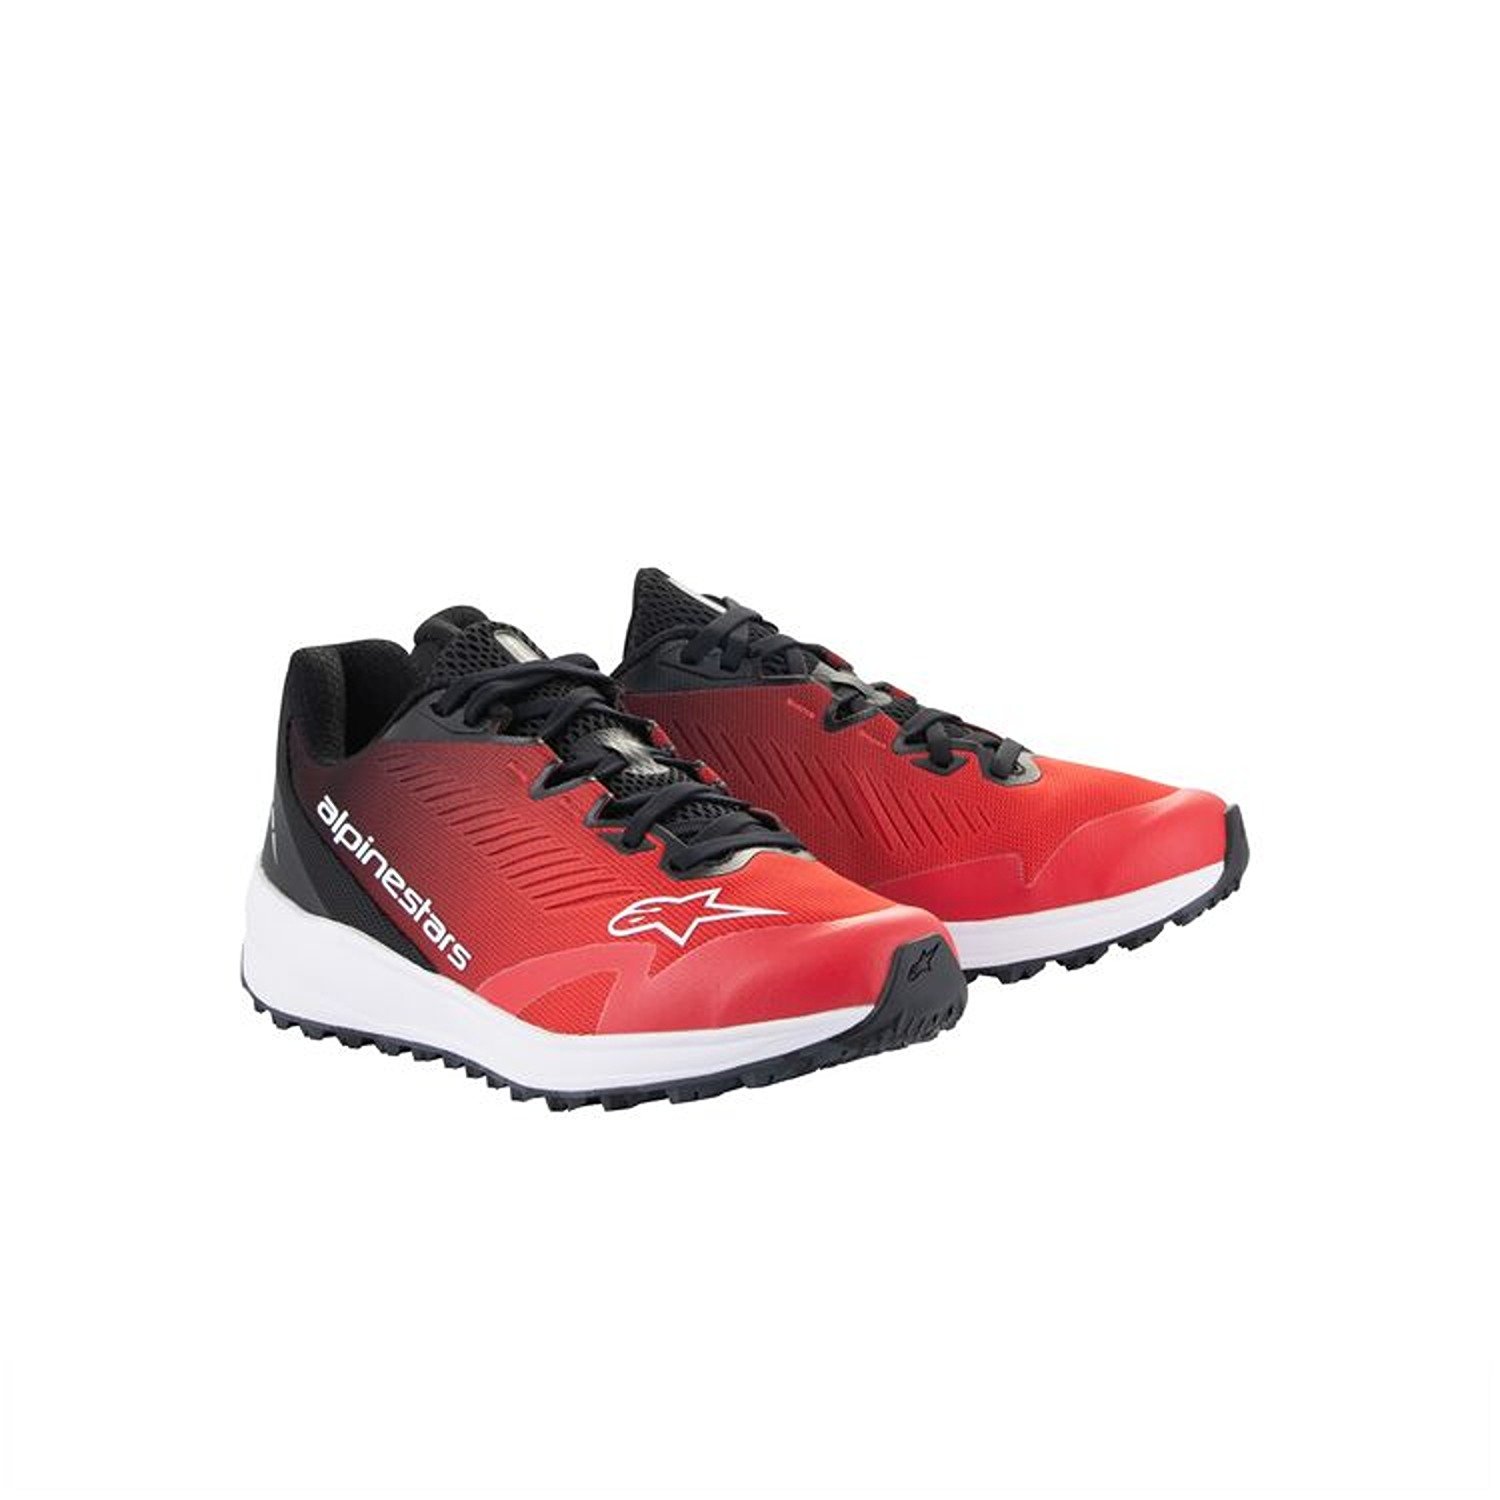 Image of Alpinestars Meta Road V2 Shoes Red Black White Size US 5 EN